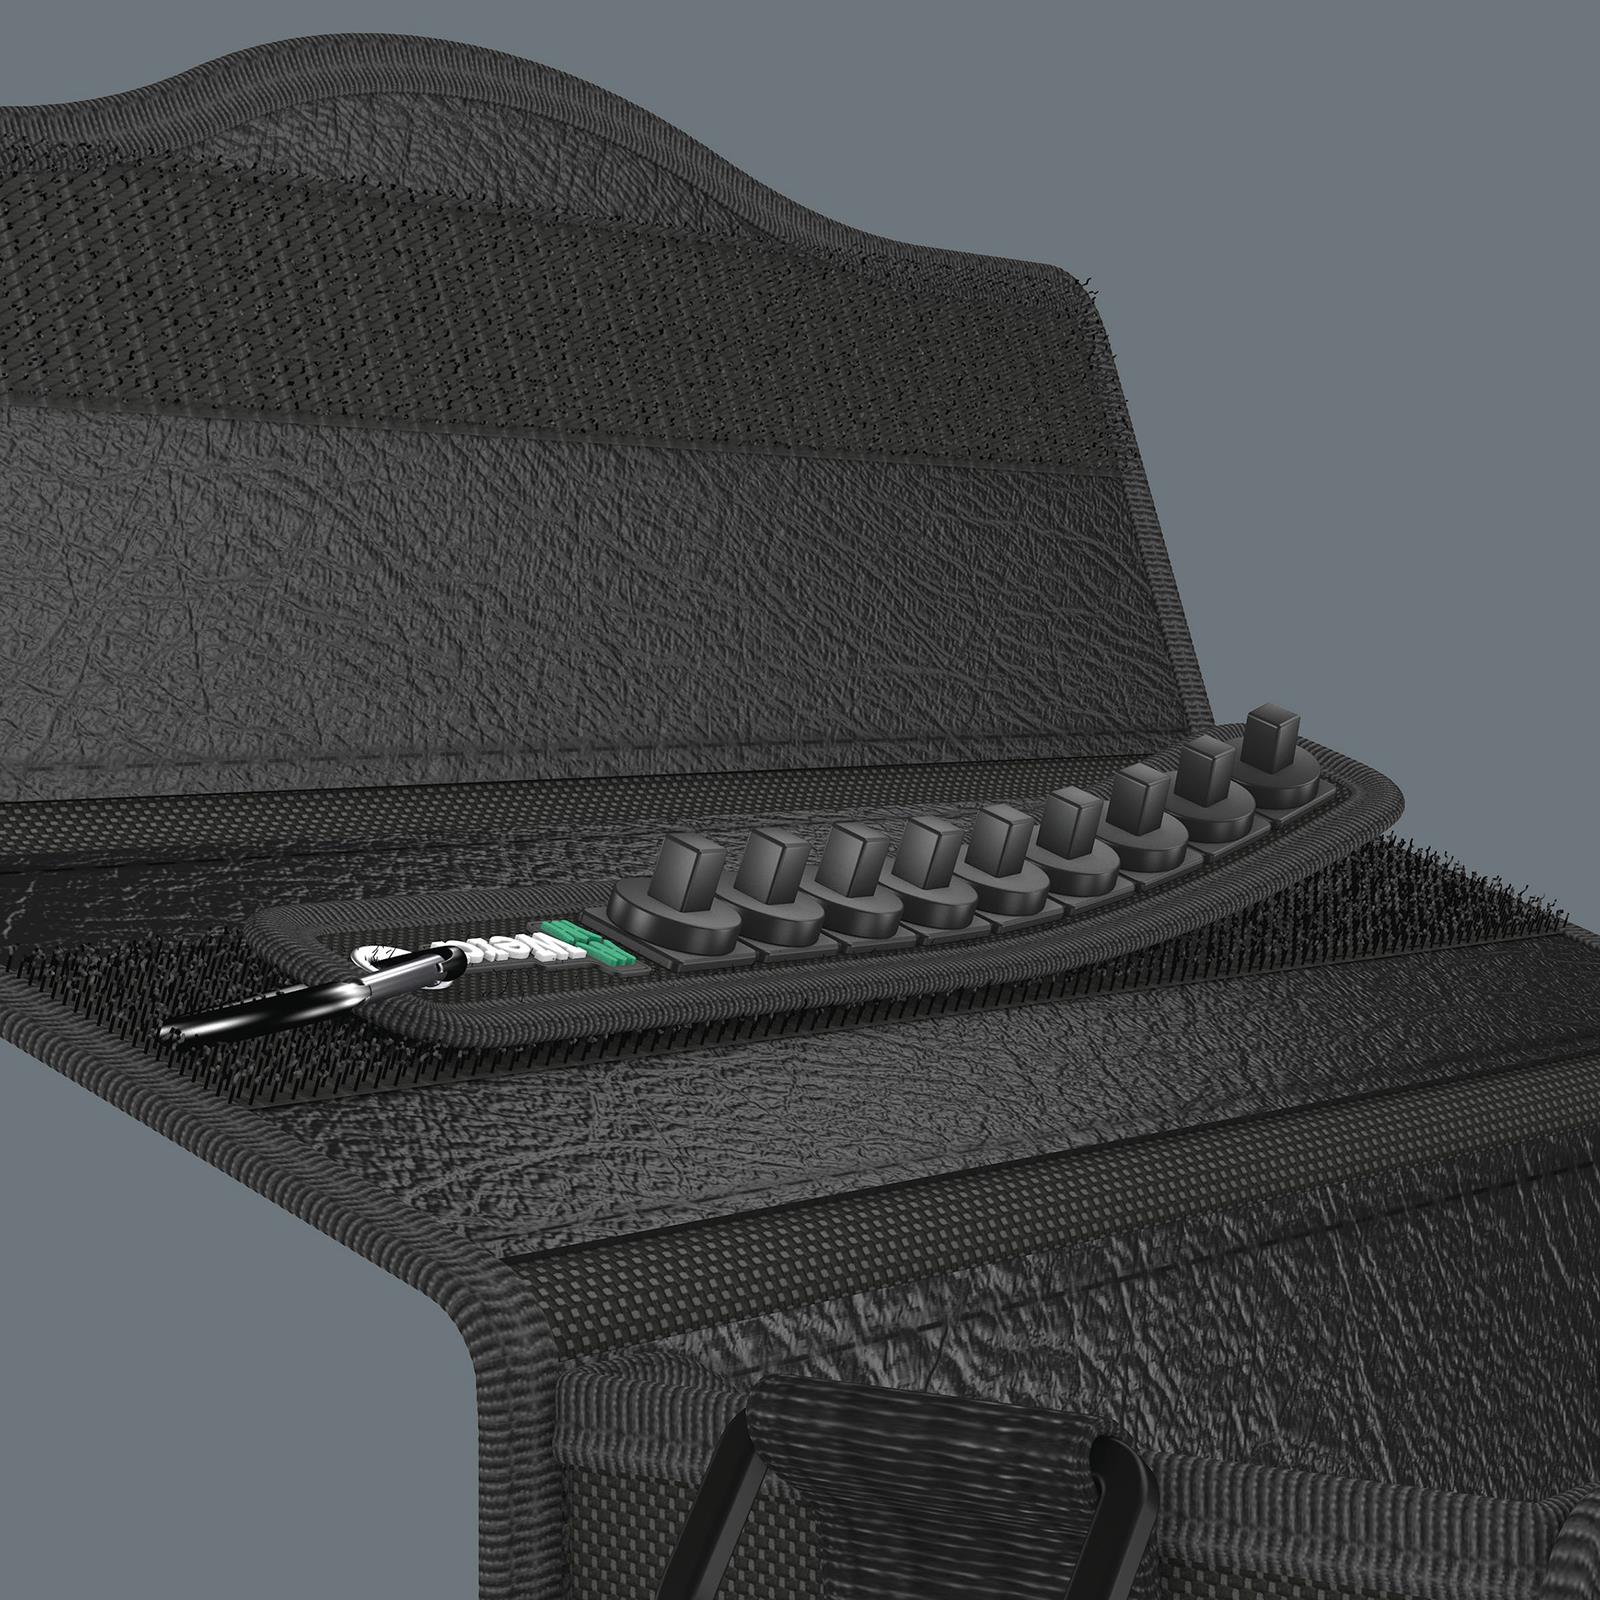 Wera Socket Rail A 1/4" Drive Textile Belt with Carabiner 9 Location Twist to Unlock Unloaded